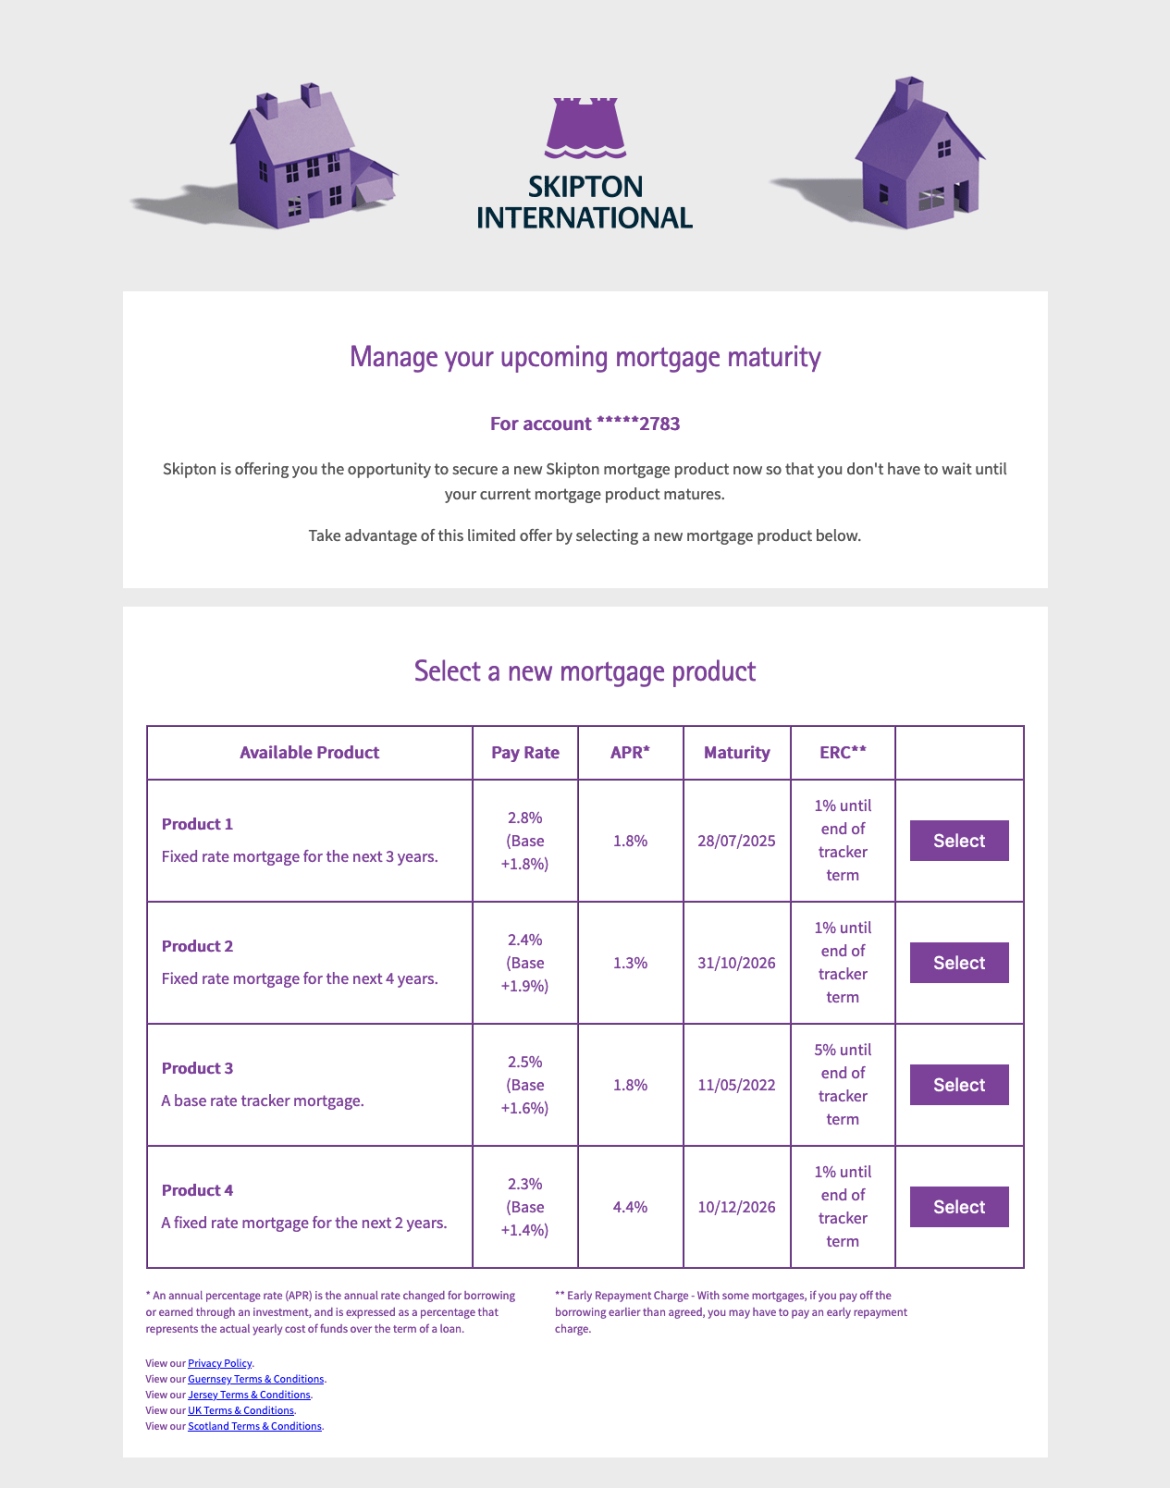 Skipton International Mortgage Maturity Management screenshot of mortgage maturity communication